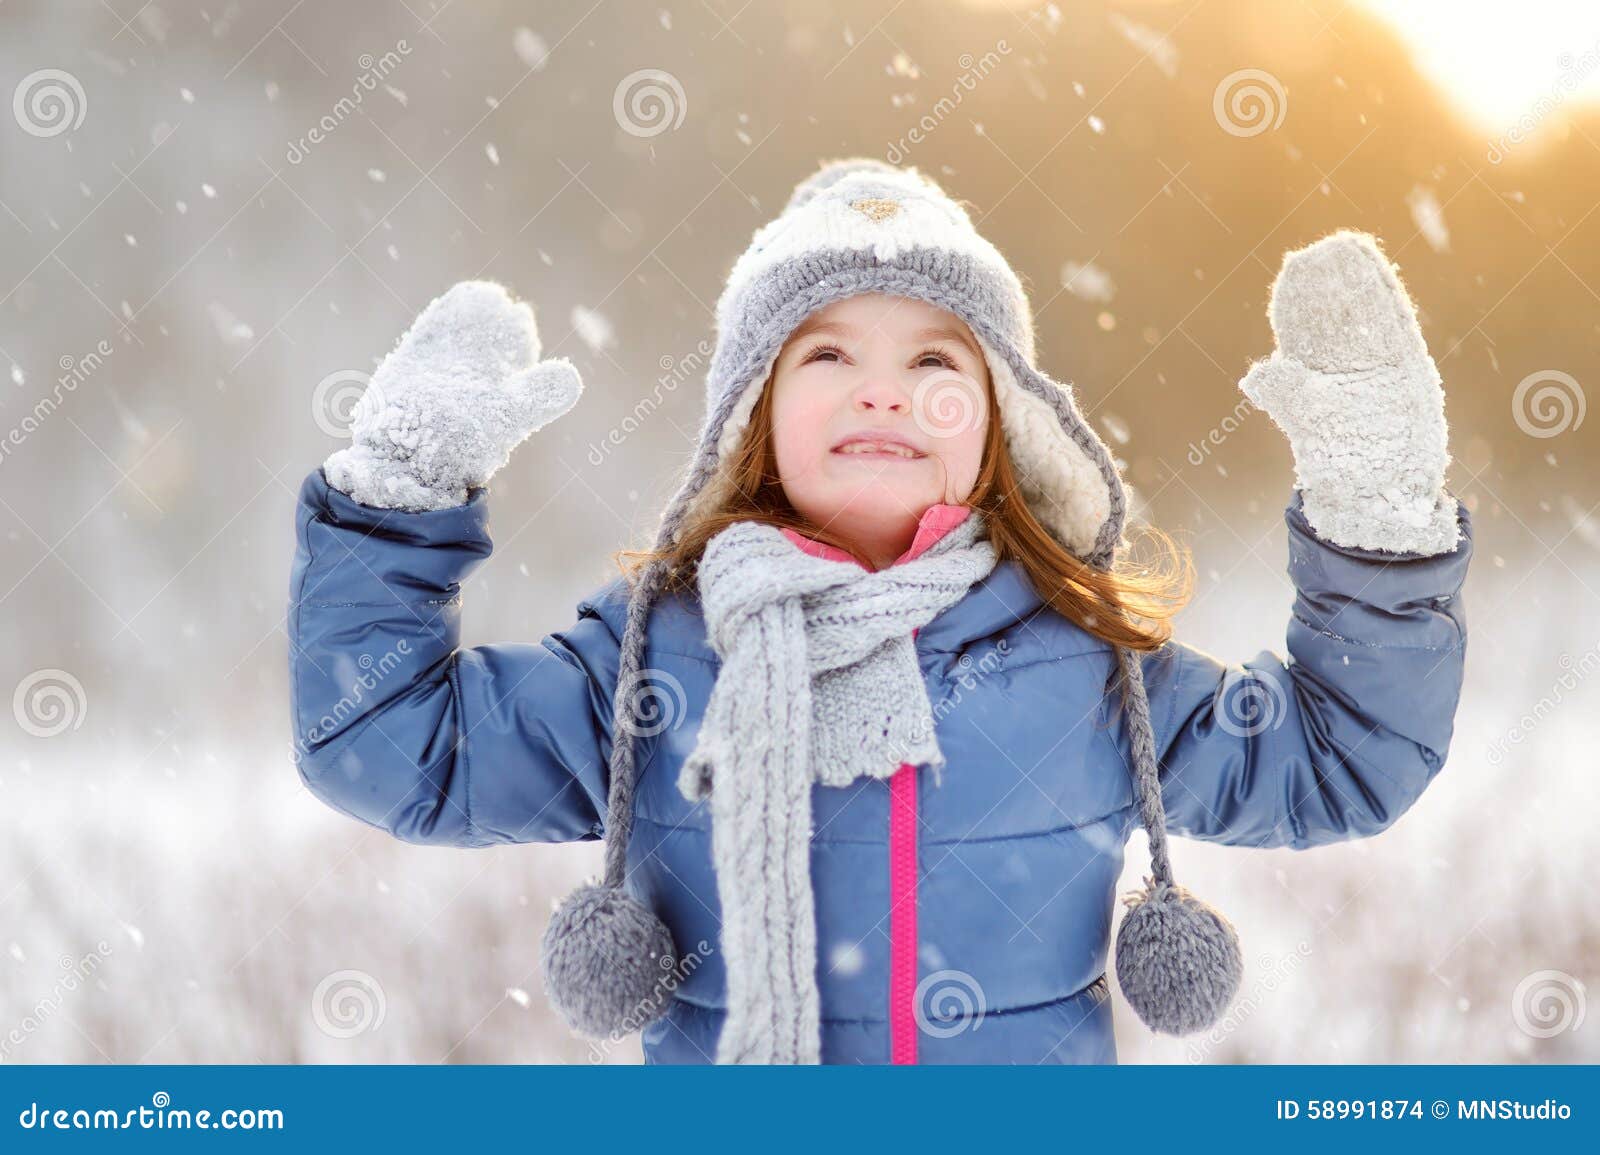 Funny Little Girl Having Fun in Winter Park Stock Photo - Image of ...